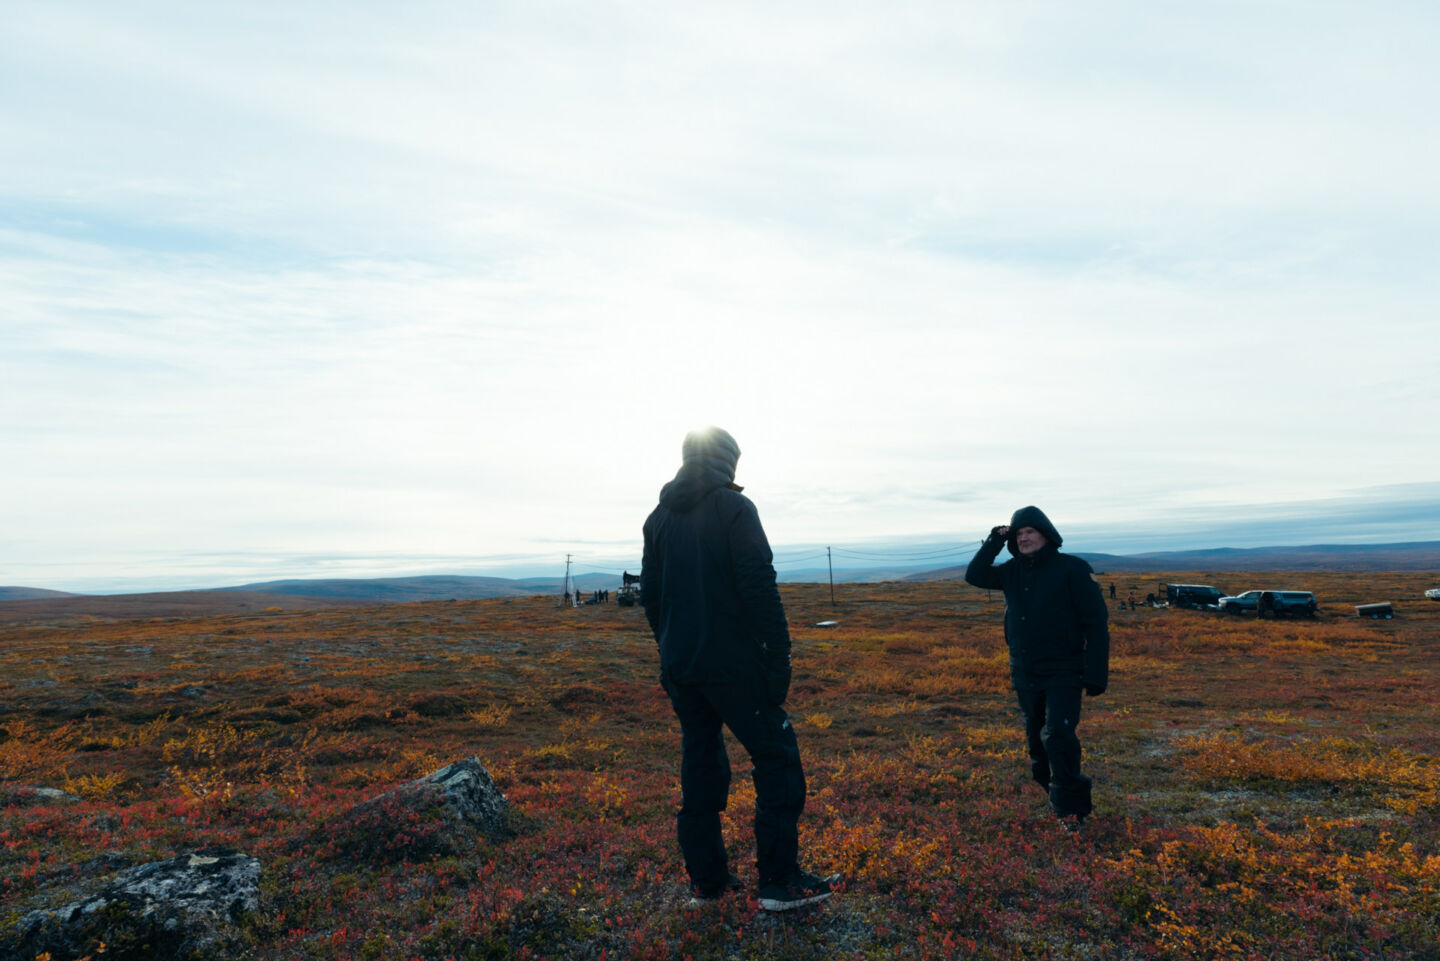 Director Jalmari Helander & producer Petri Jokiranta consider the autumn colors in Utsjoki, from Sisu, filmed in northernmost Finland